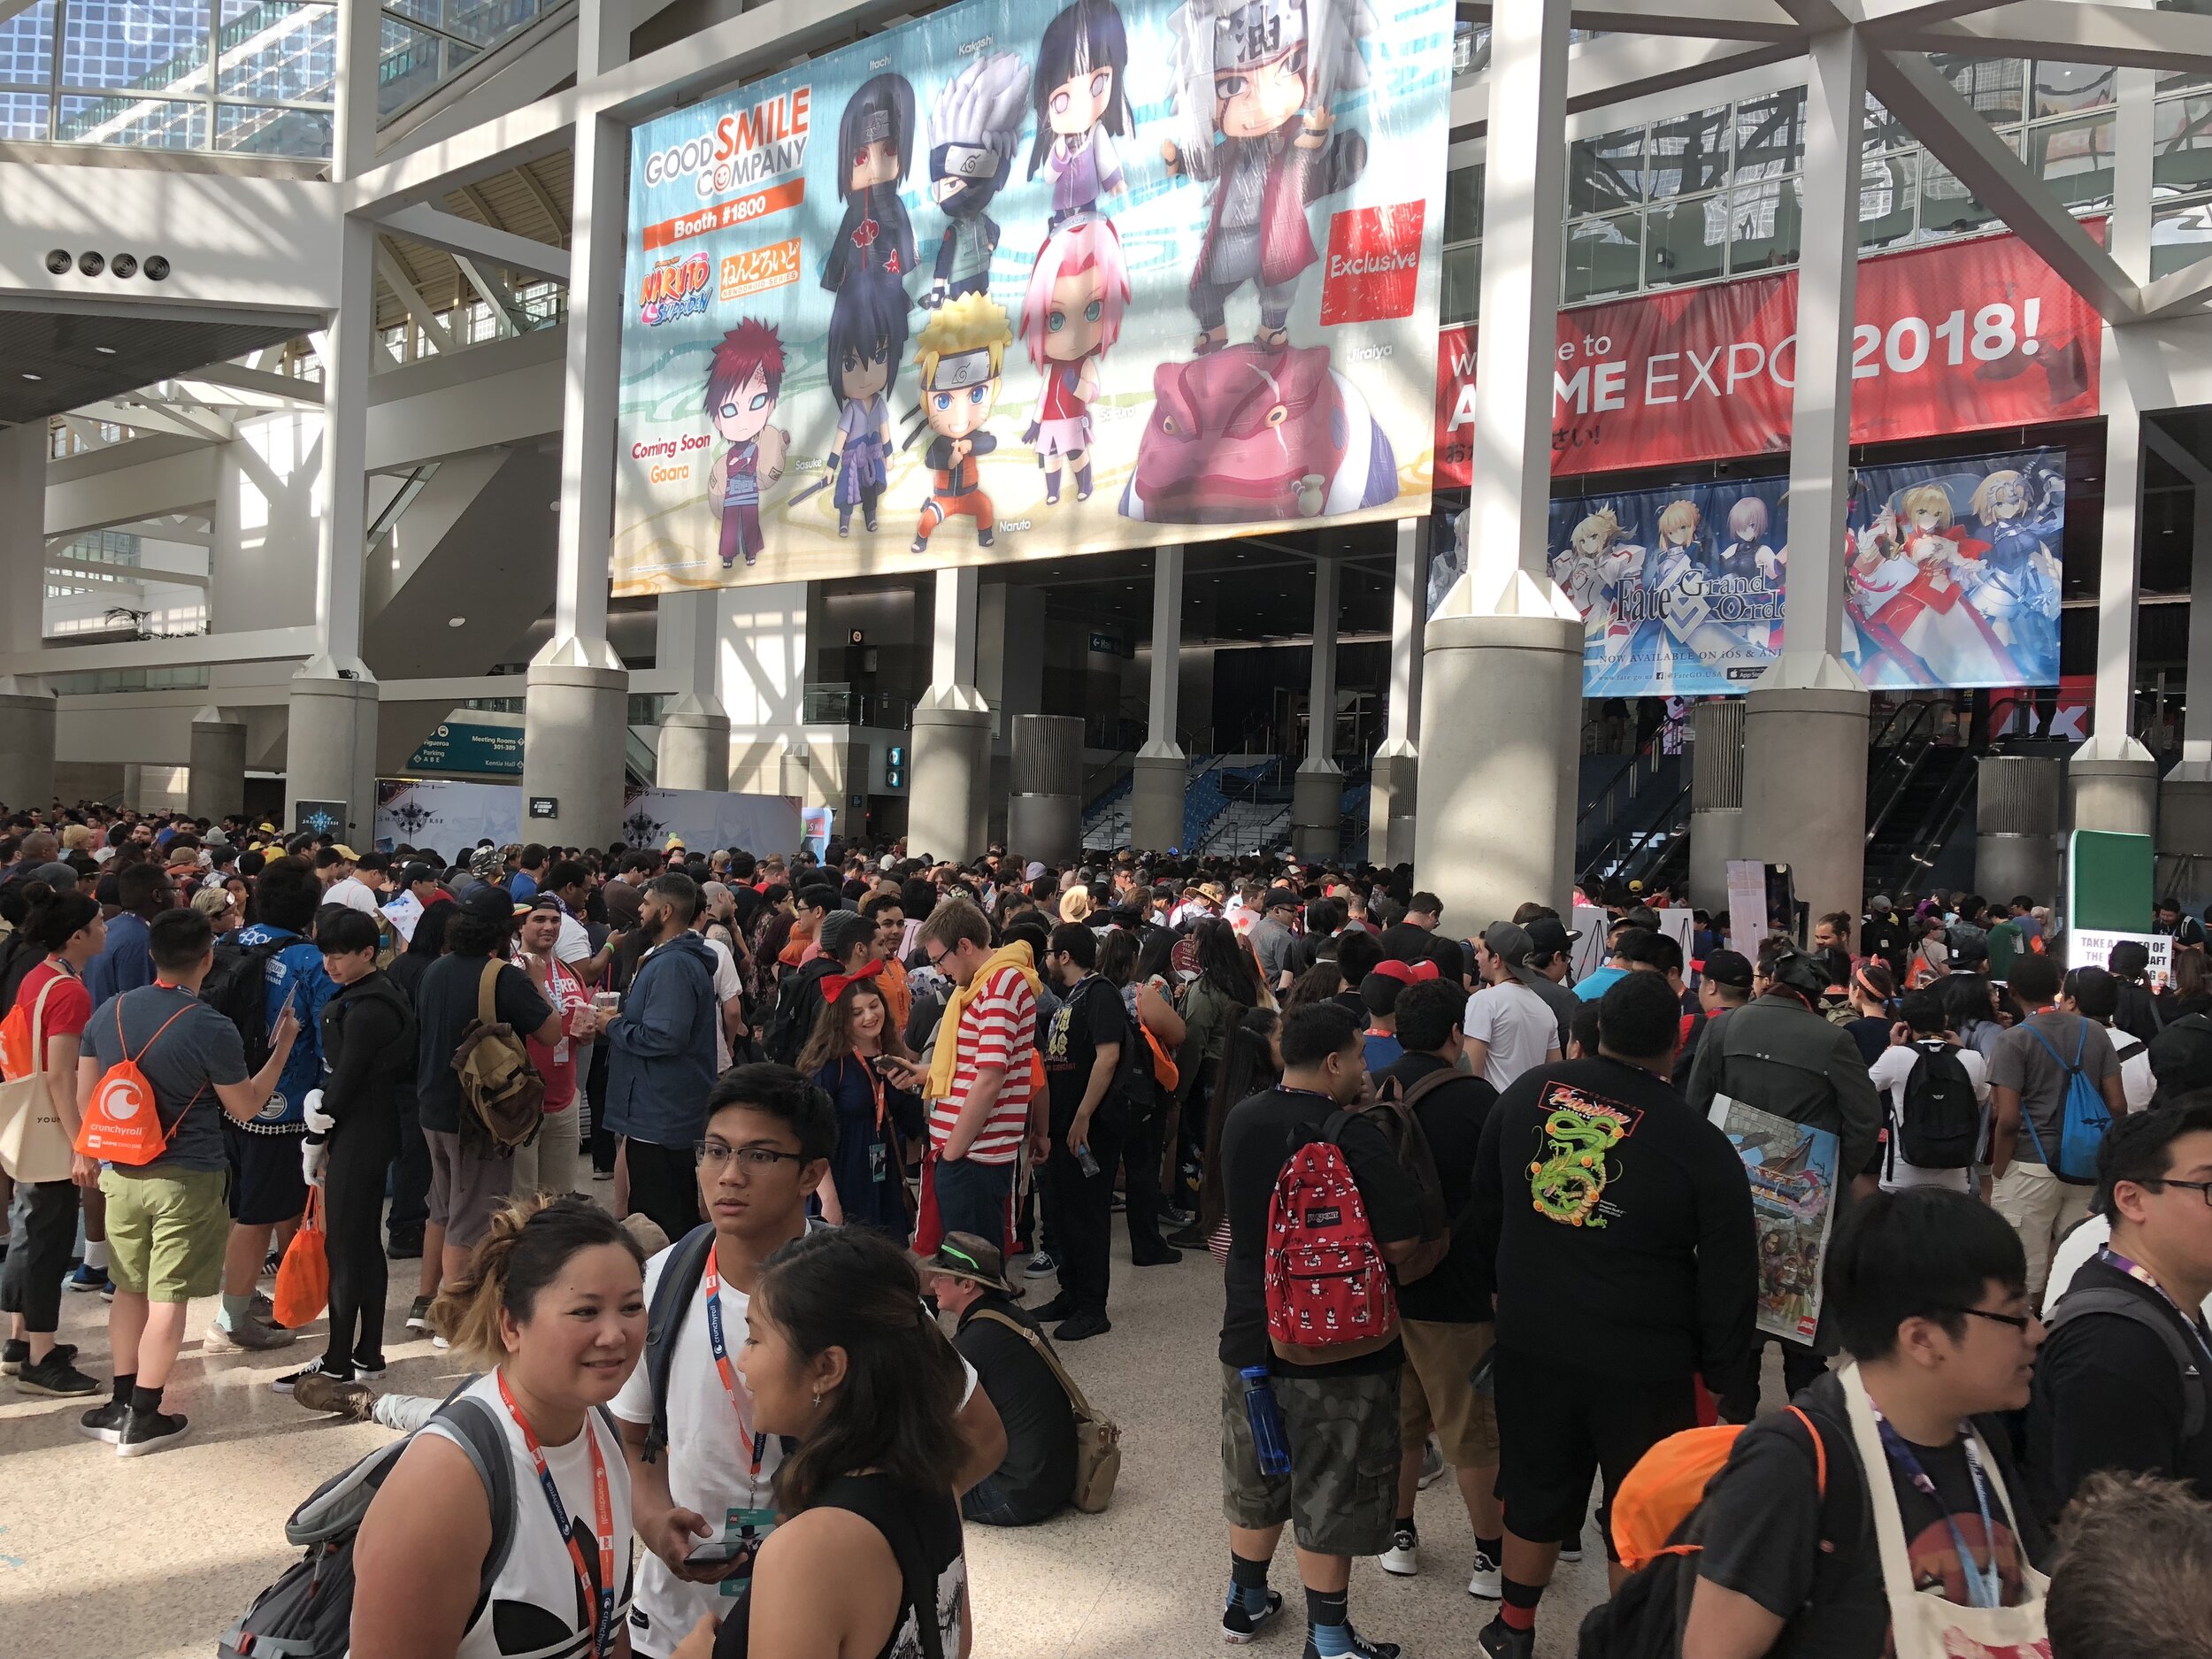 Overwatch Invades Anime Expo 2018!